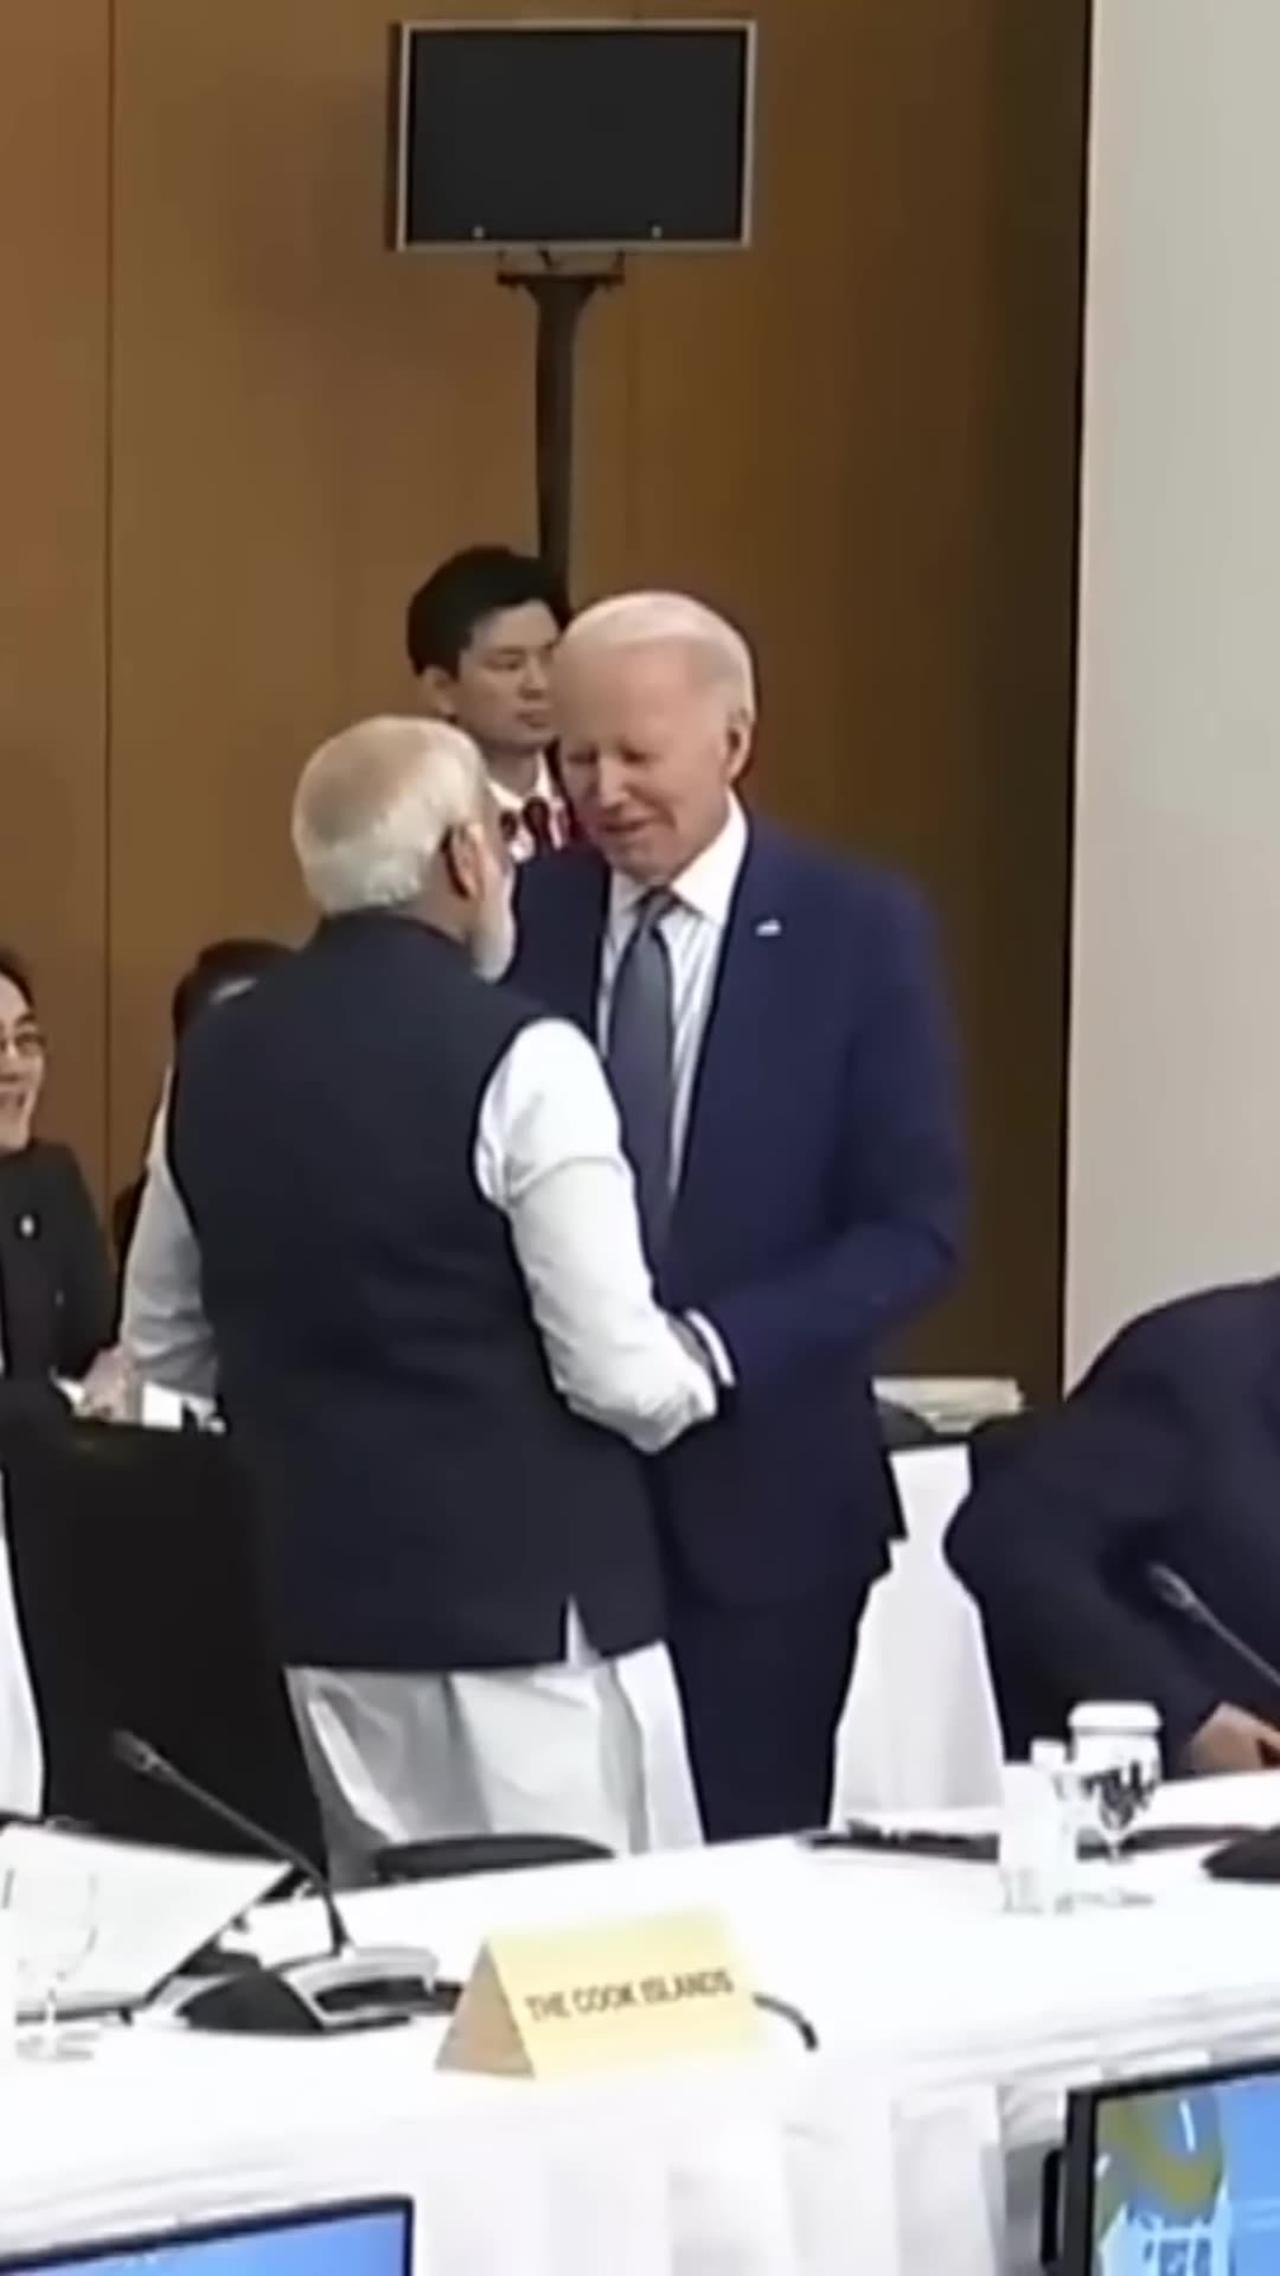 A warm meeting between PM Modi and US President Biden at Hiroshima G7 Summit